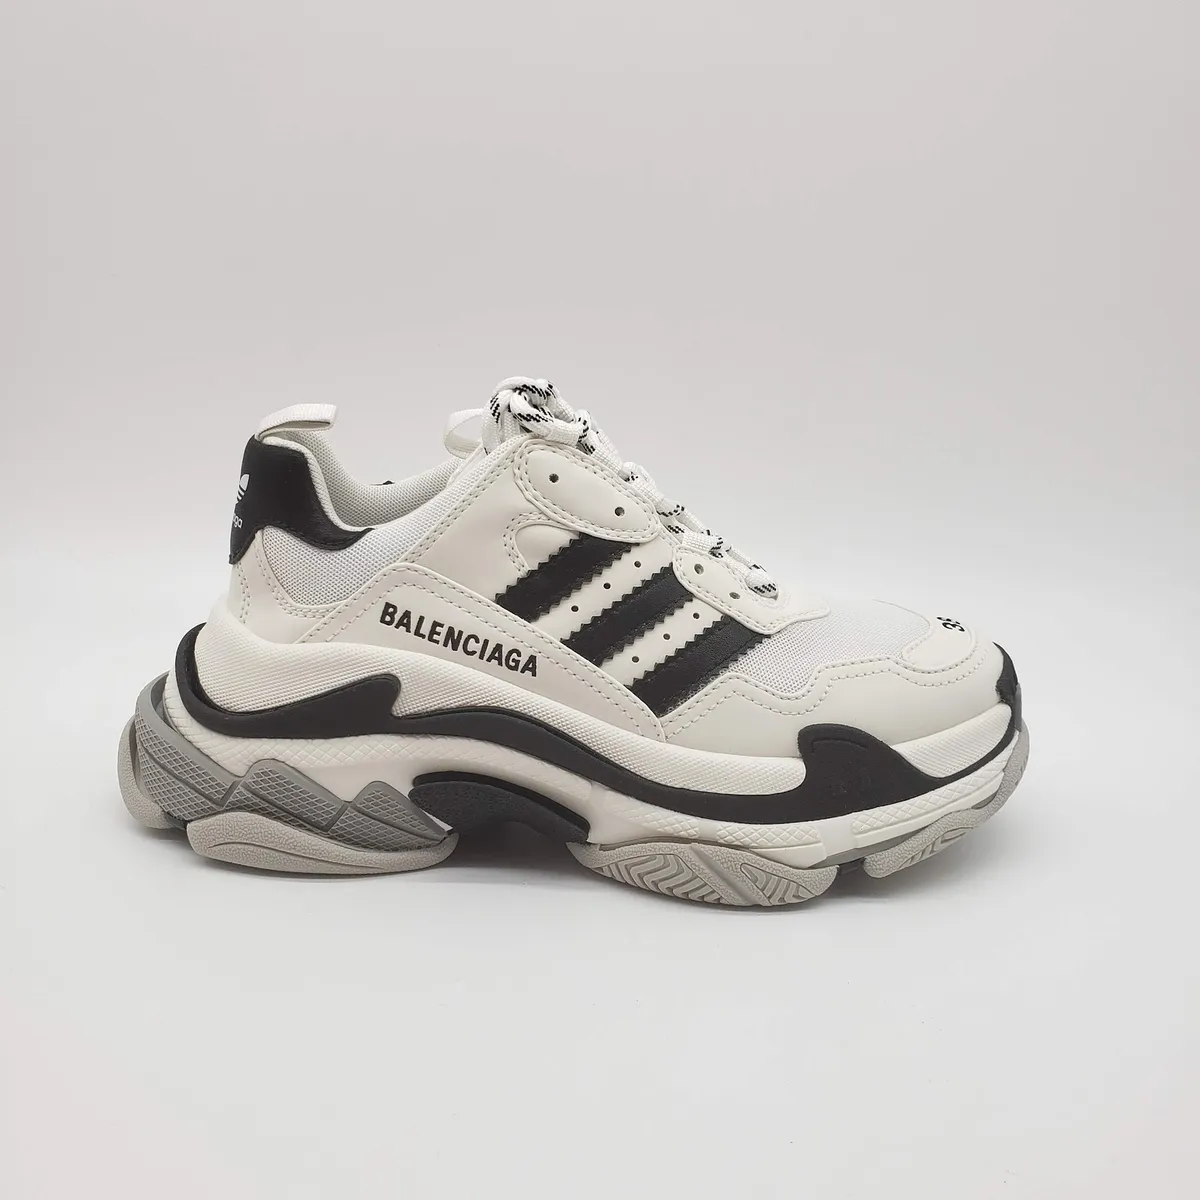 Balenciaga x Adidas Triple S LIMITED EDITION Sneakers | White/Black | NEW |